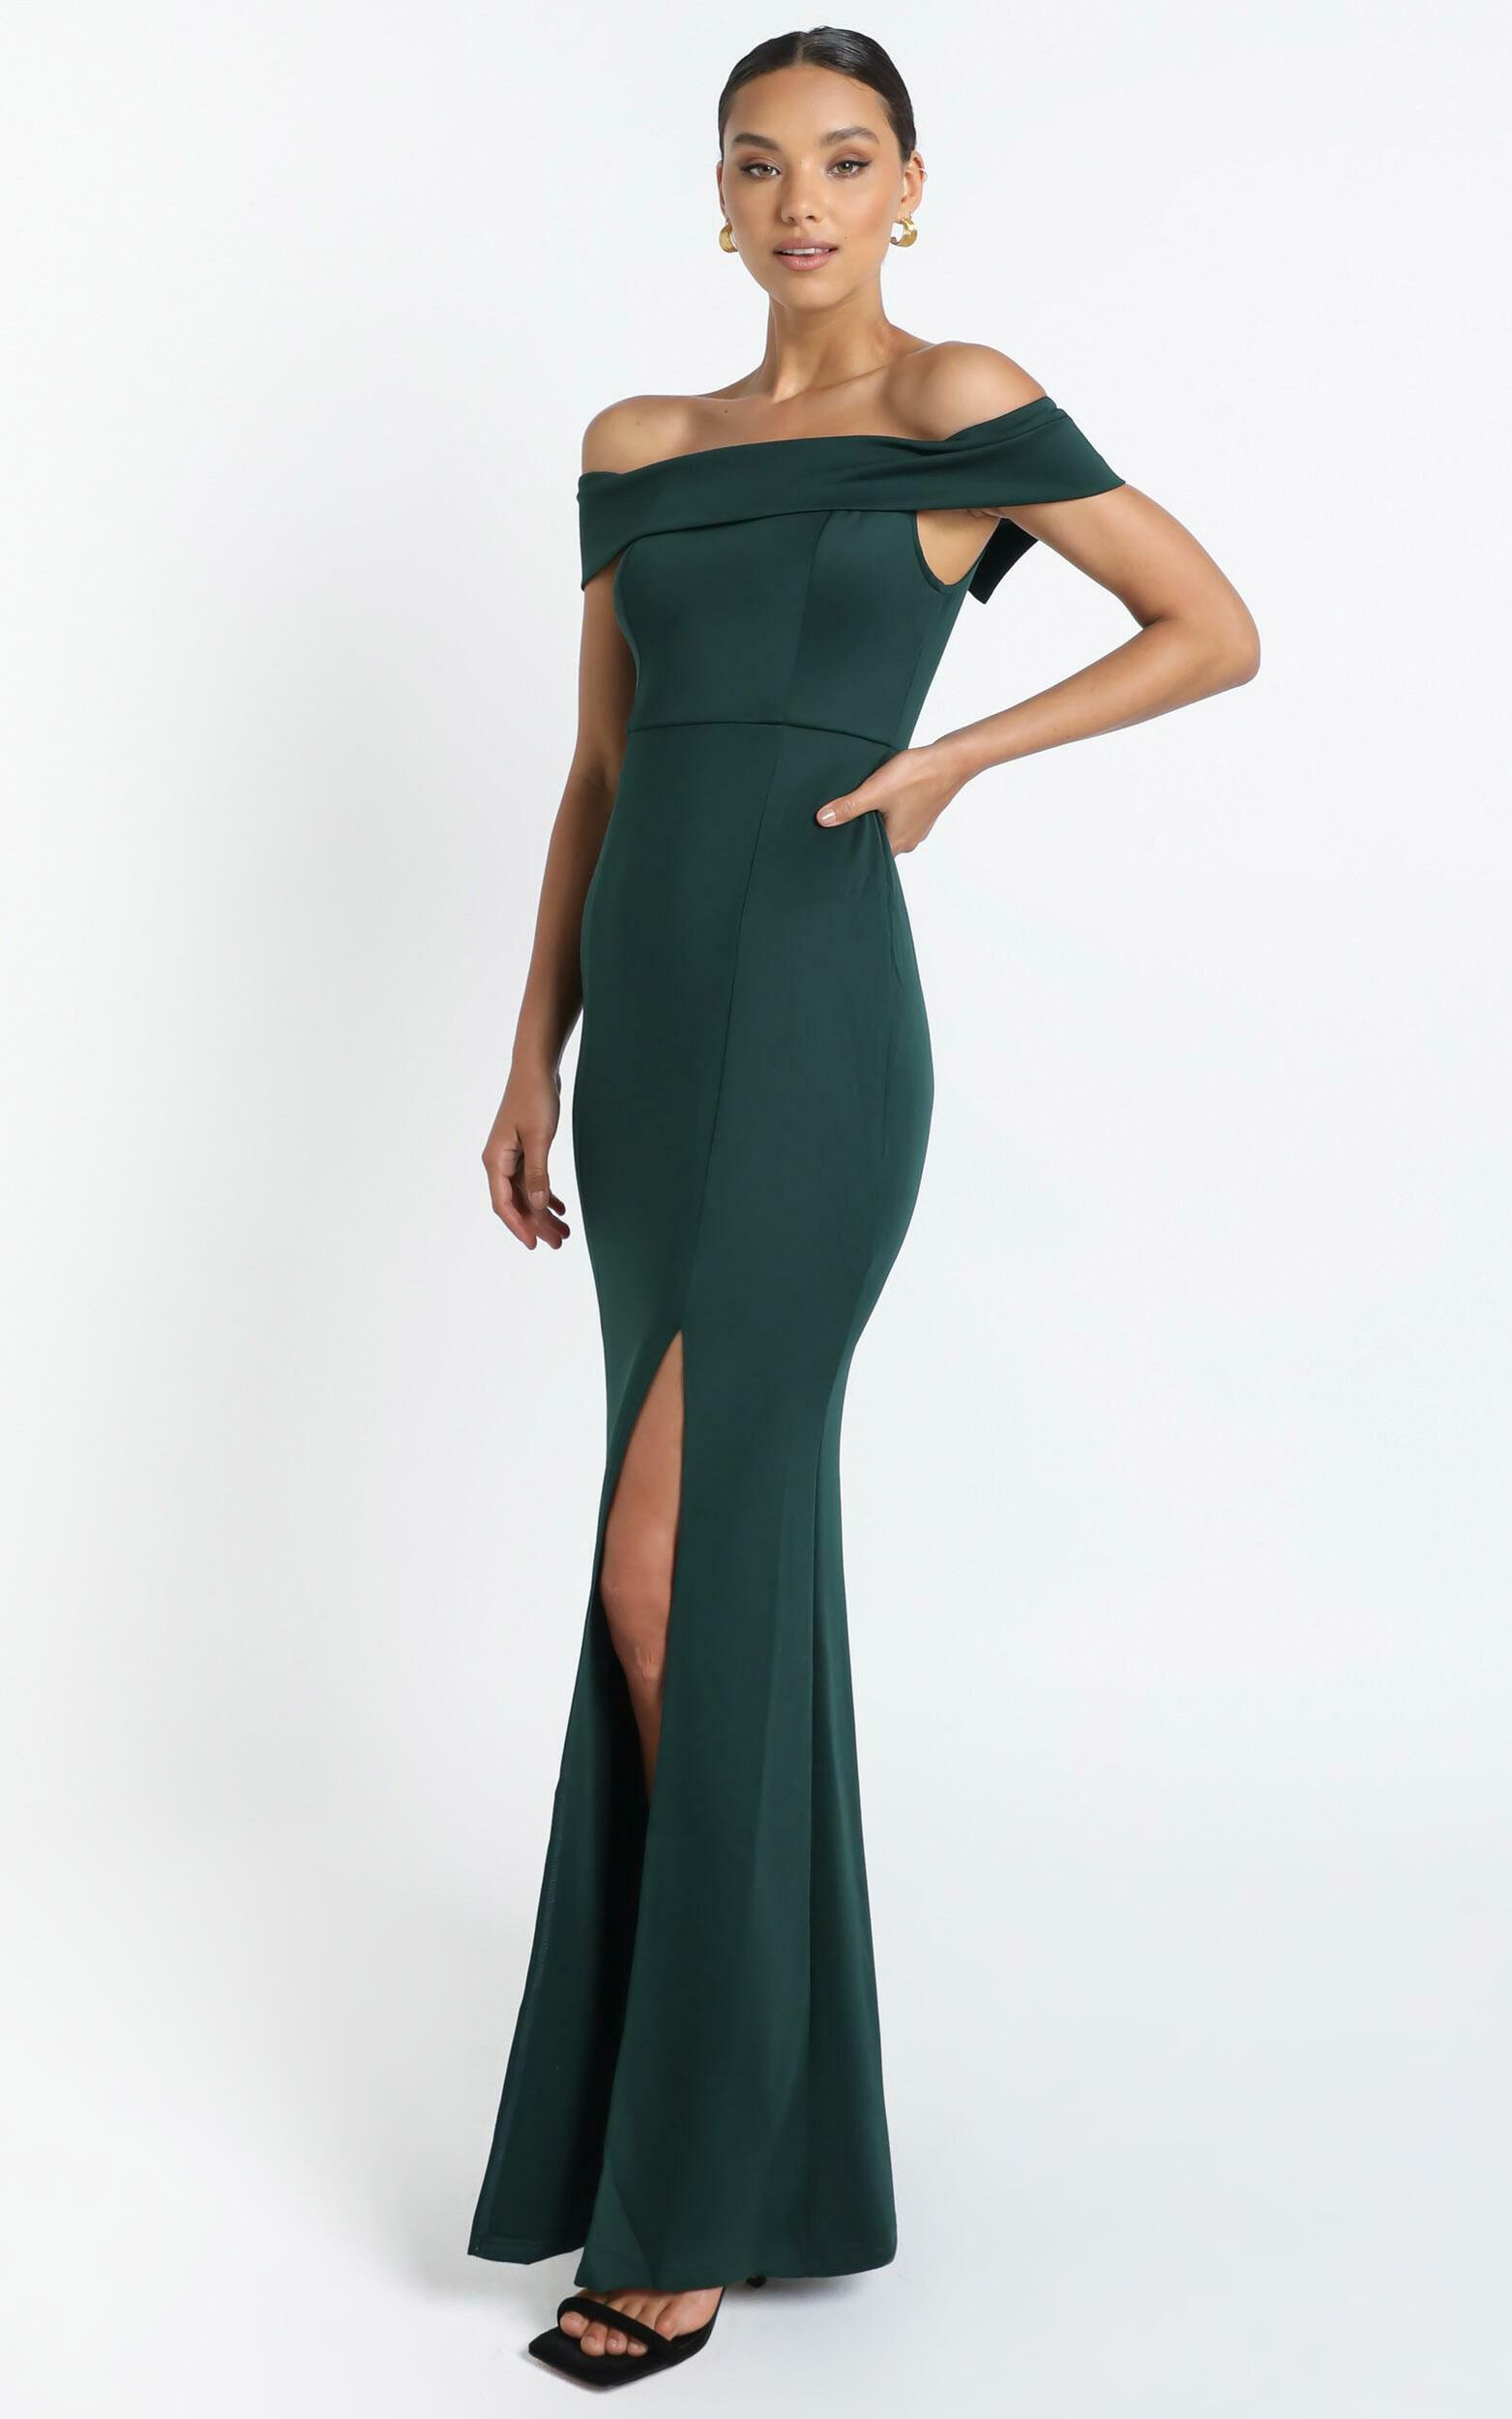 We Got This Feeling Dress in Emerald | Showpo USA